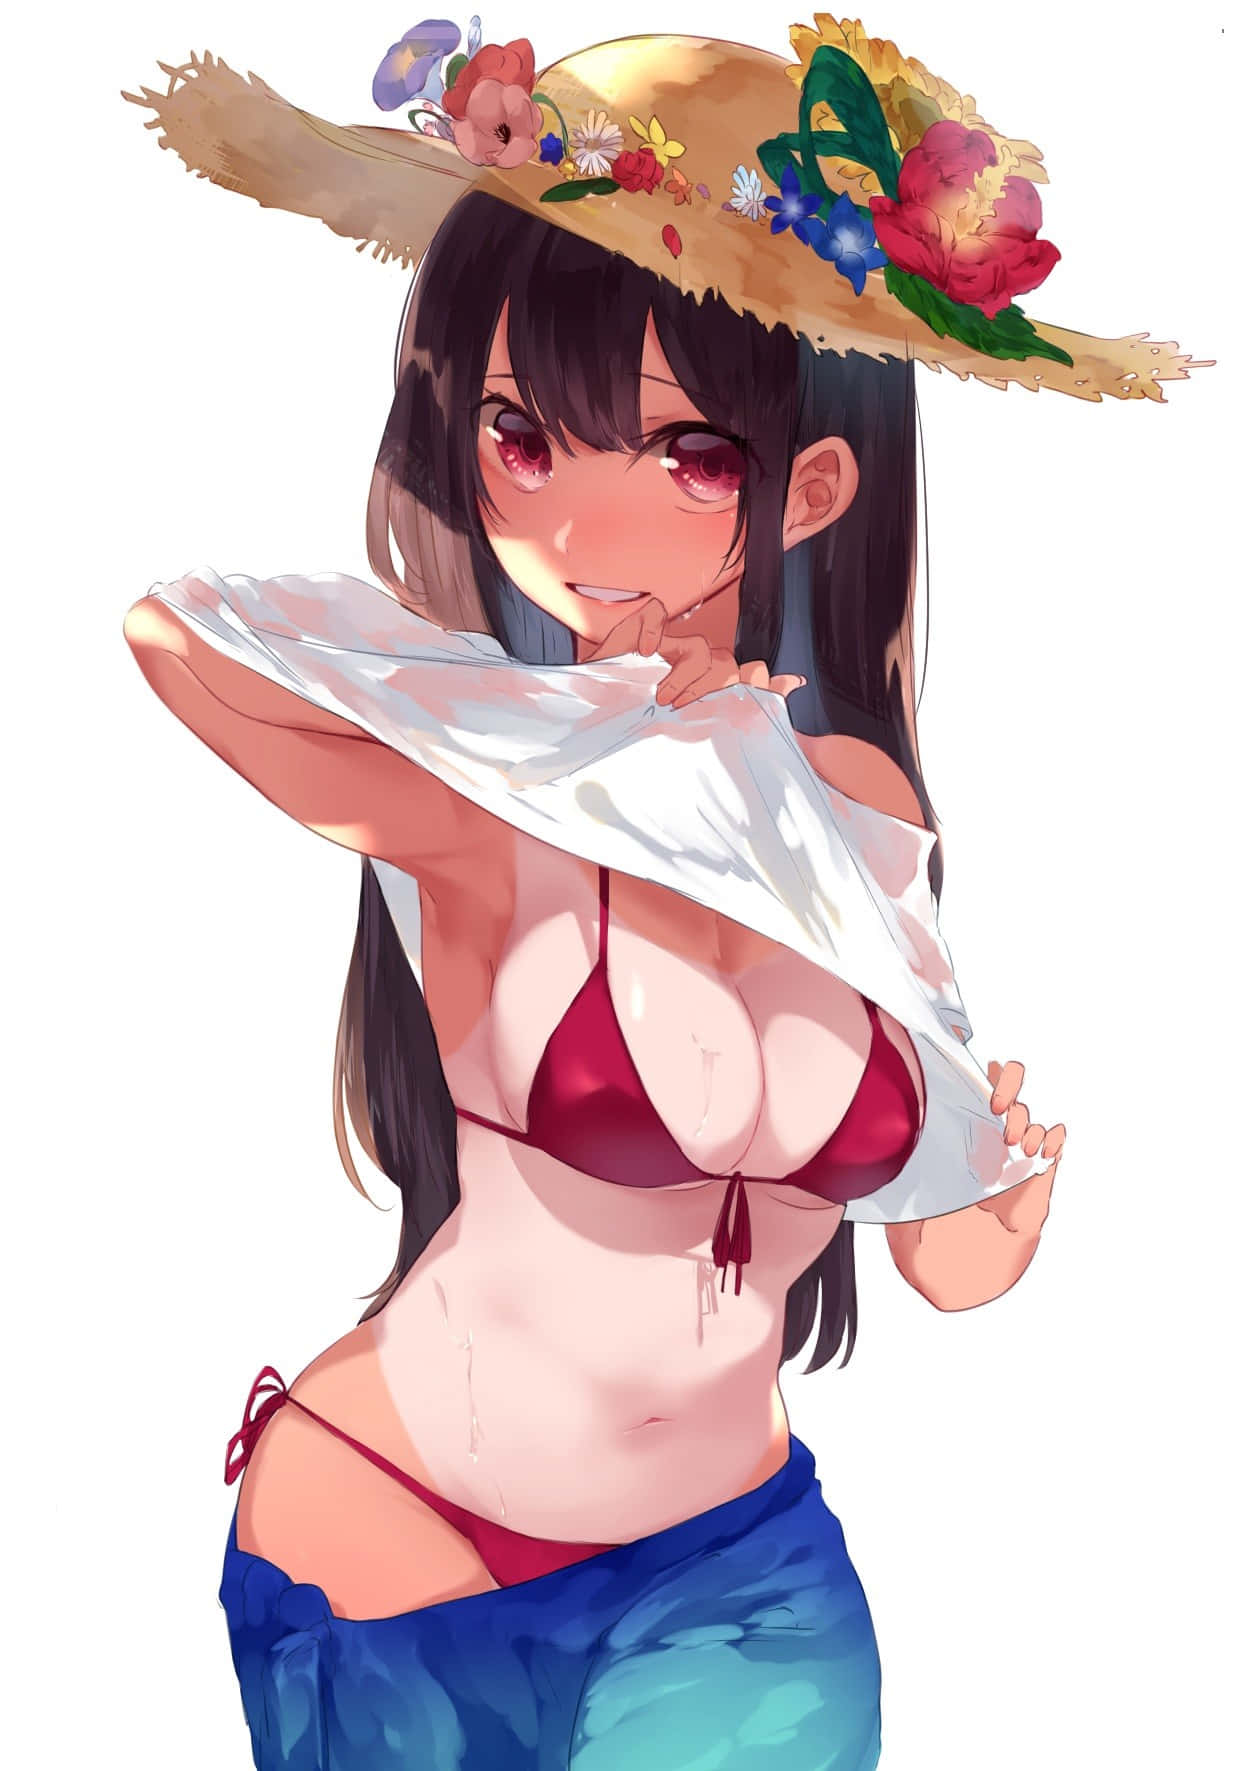 Hot Anime Girl Summer Bikini Wallpaper